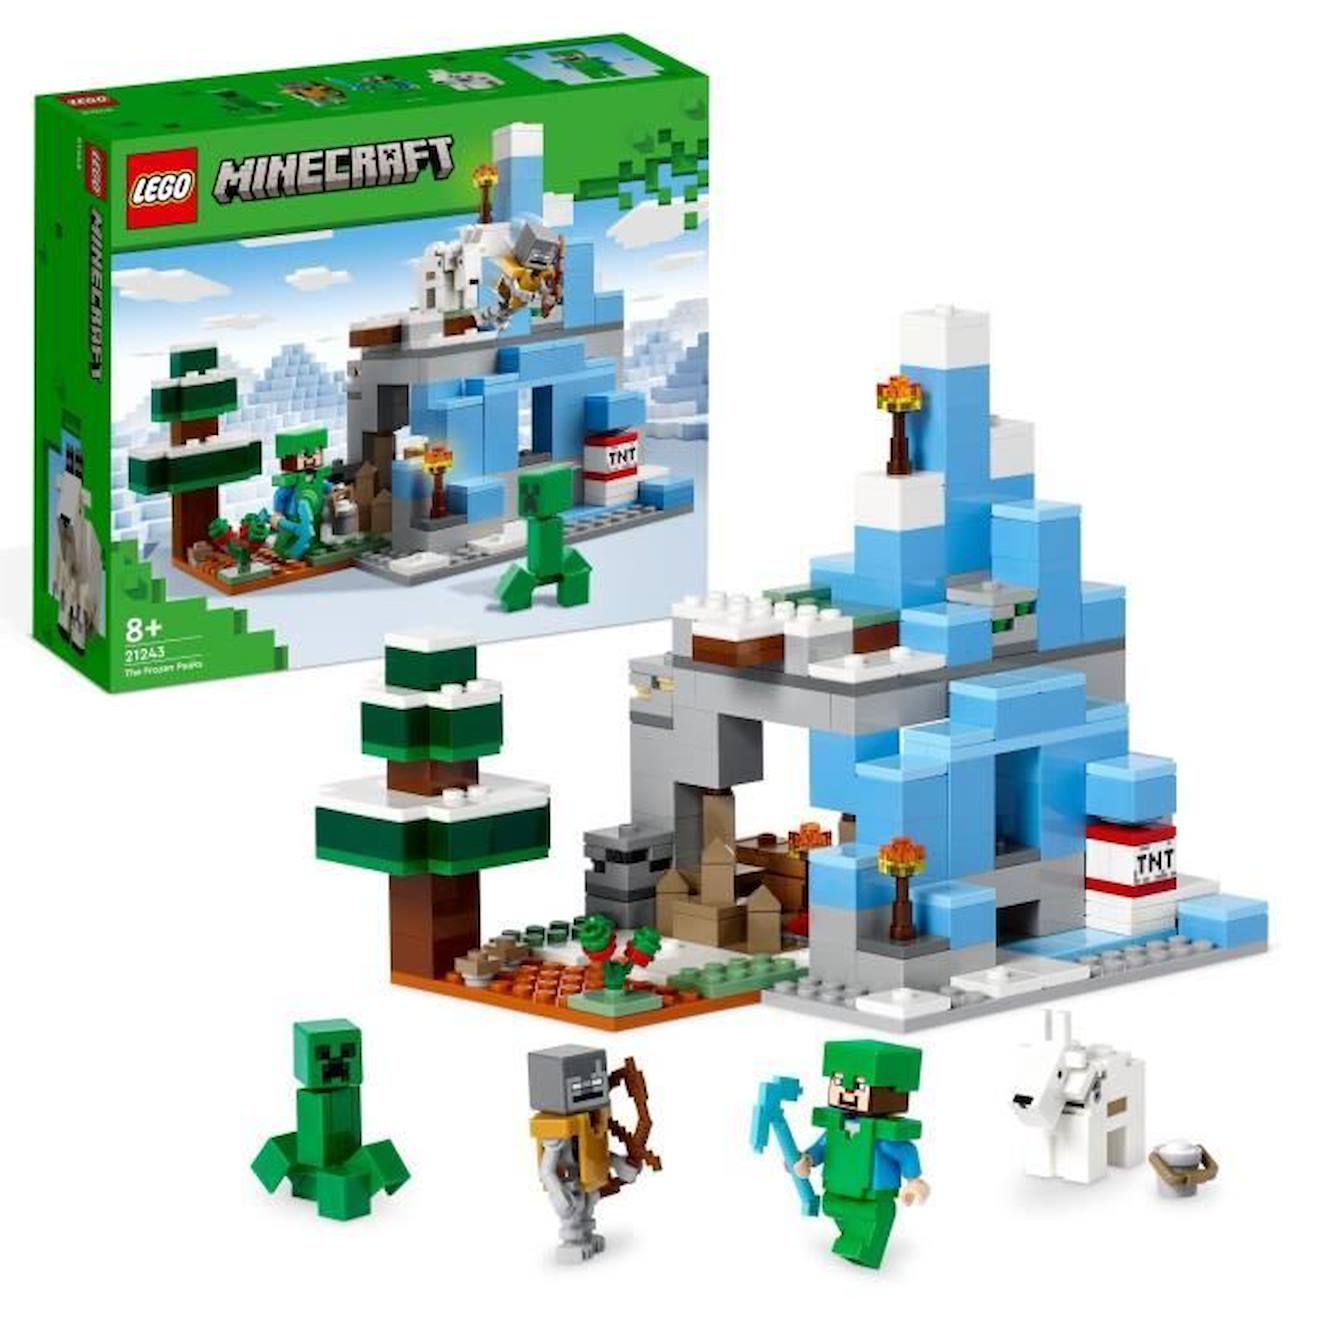 Lego Minecraft 21243 Les Pics Gelés, Jouet Enfants 8 Ans, Avec Figurines Steve Et Creeper Bleu